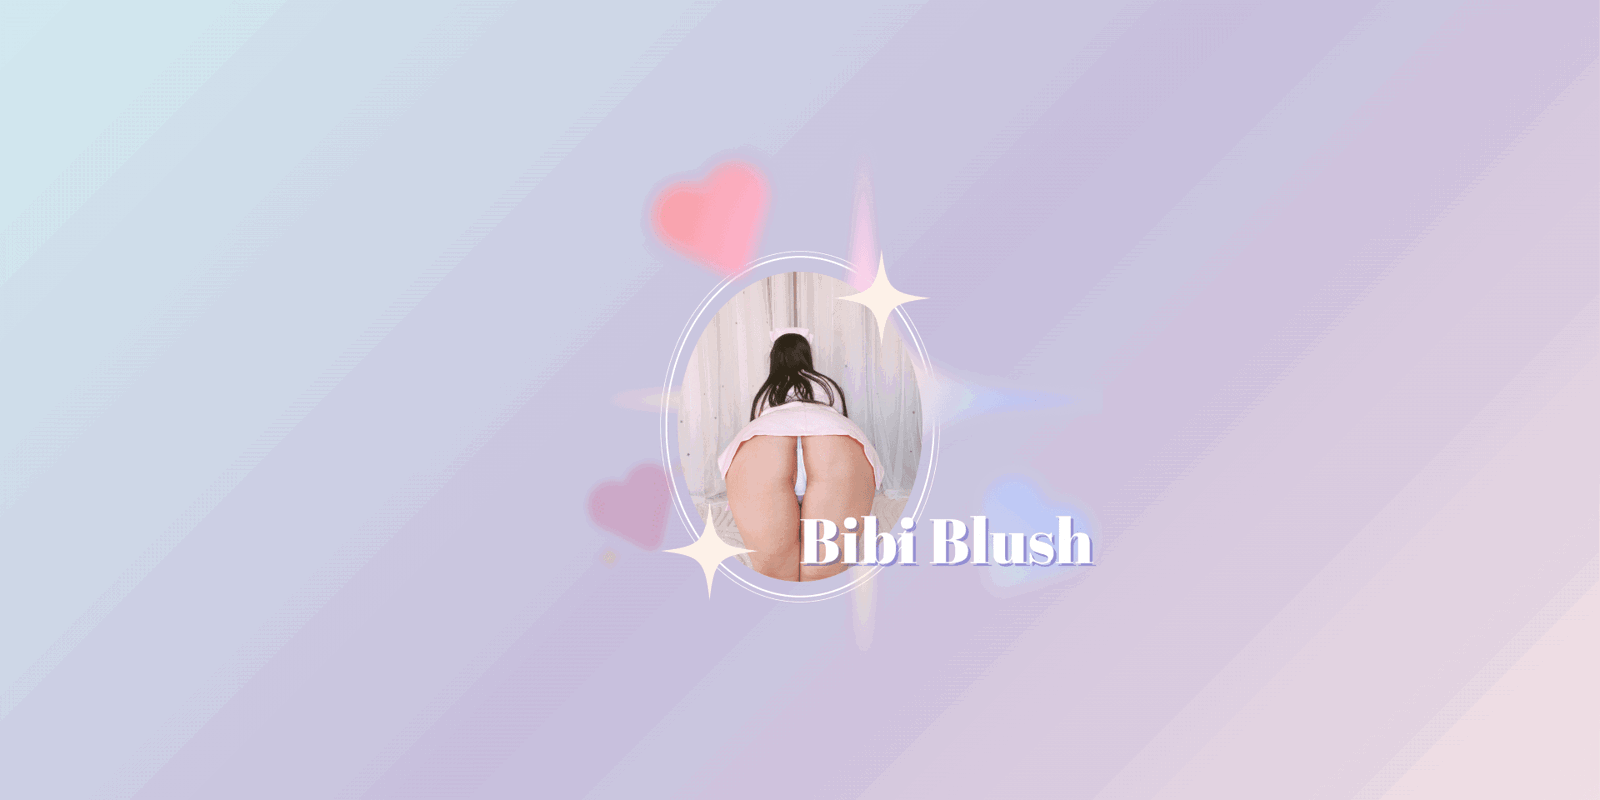 Cover photo of Bibi Blush